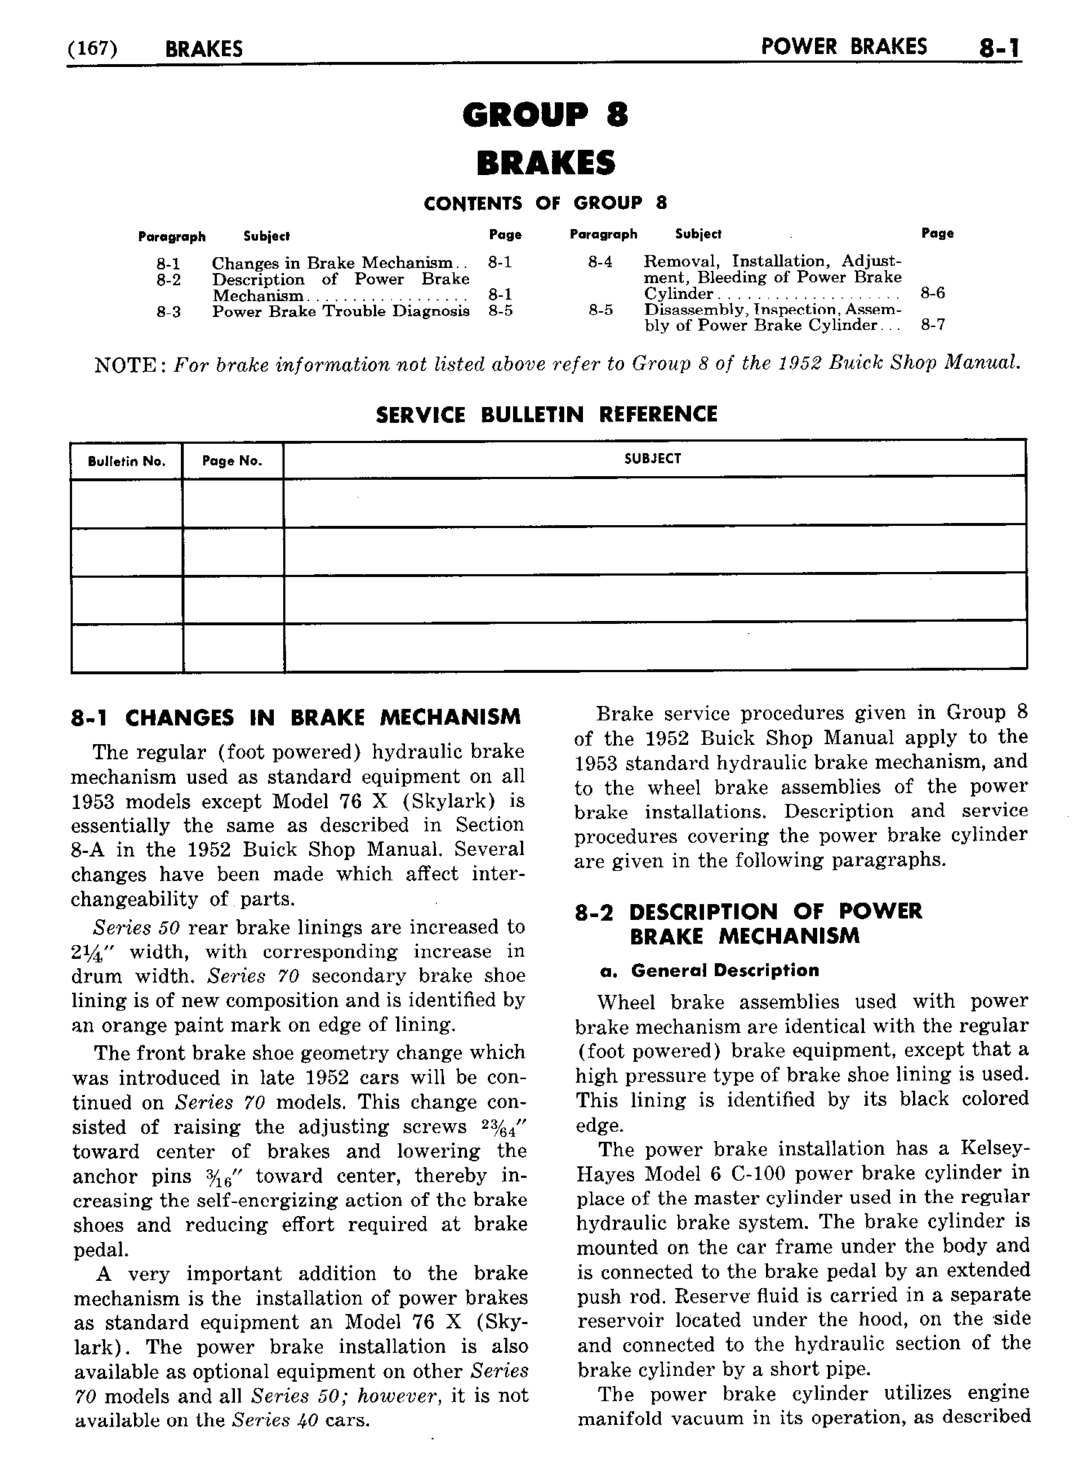 n_09 1953 Buick Shop Manual - Brakes-001-001.jpg